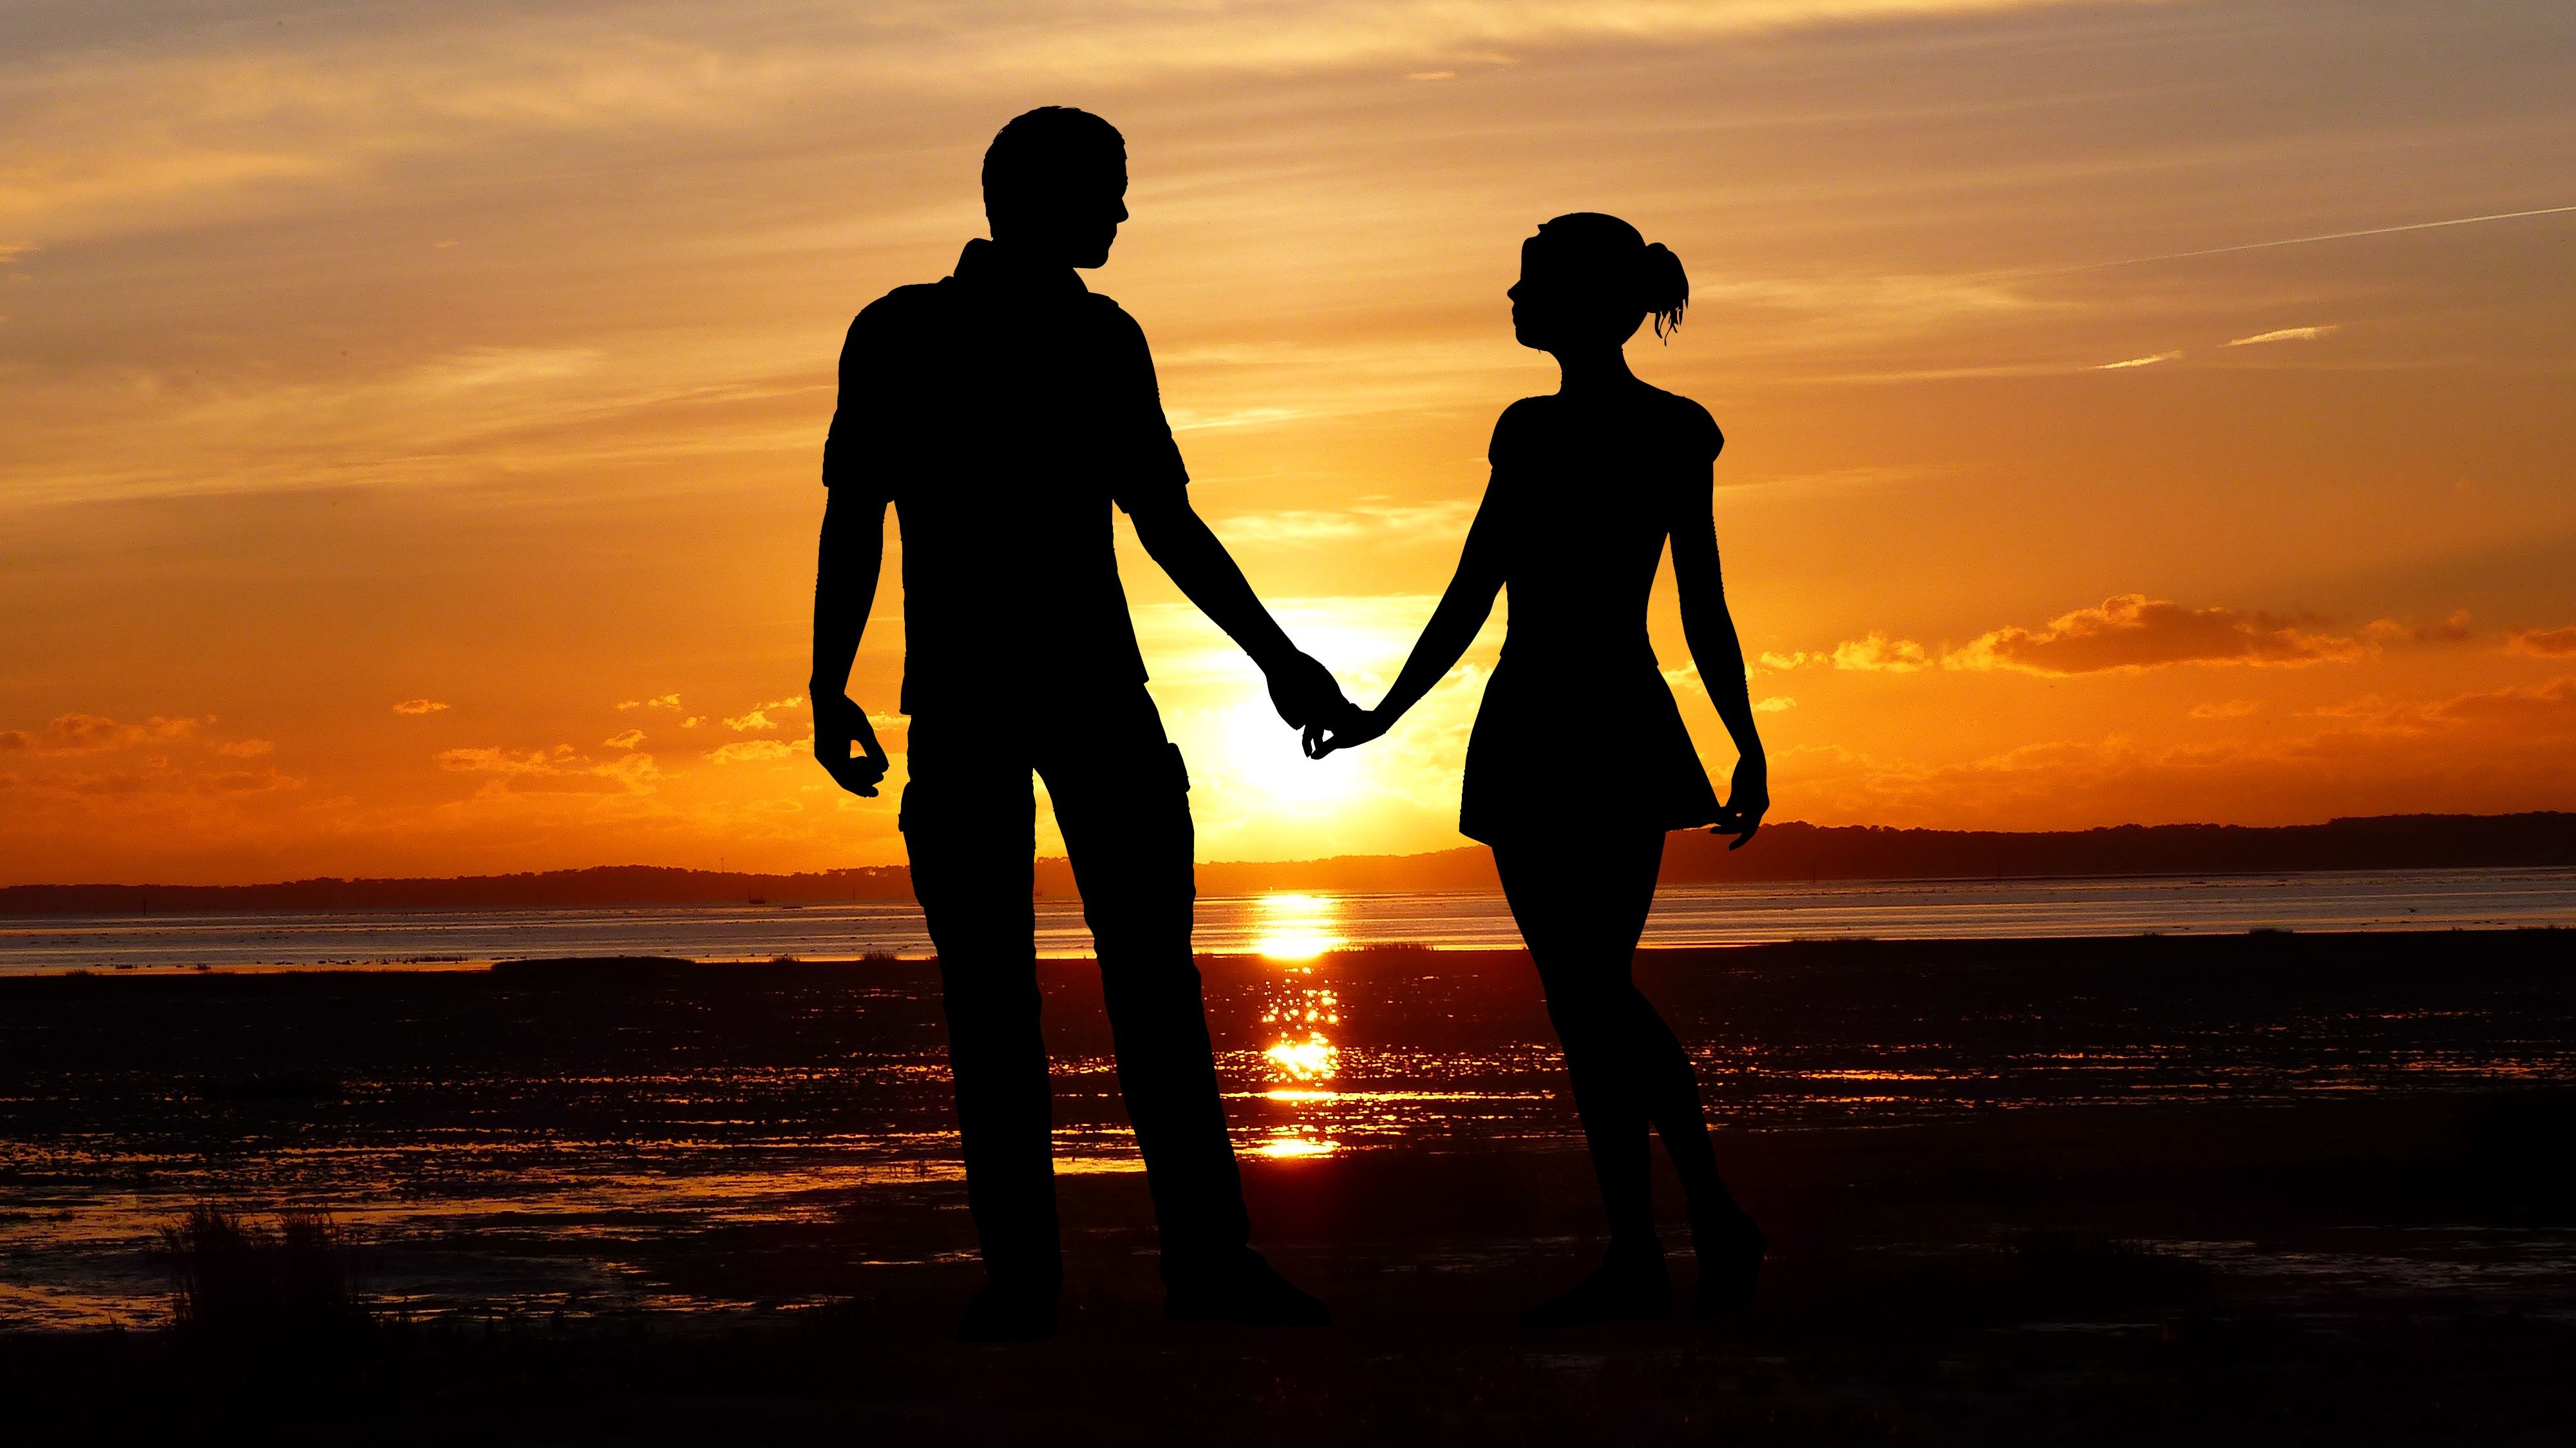 Couple 4K Wallpaper, Beach, Romantic, Silhouette, Sunset, Seascape, Together, Love